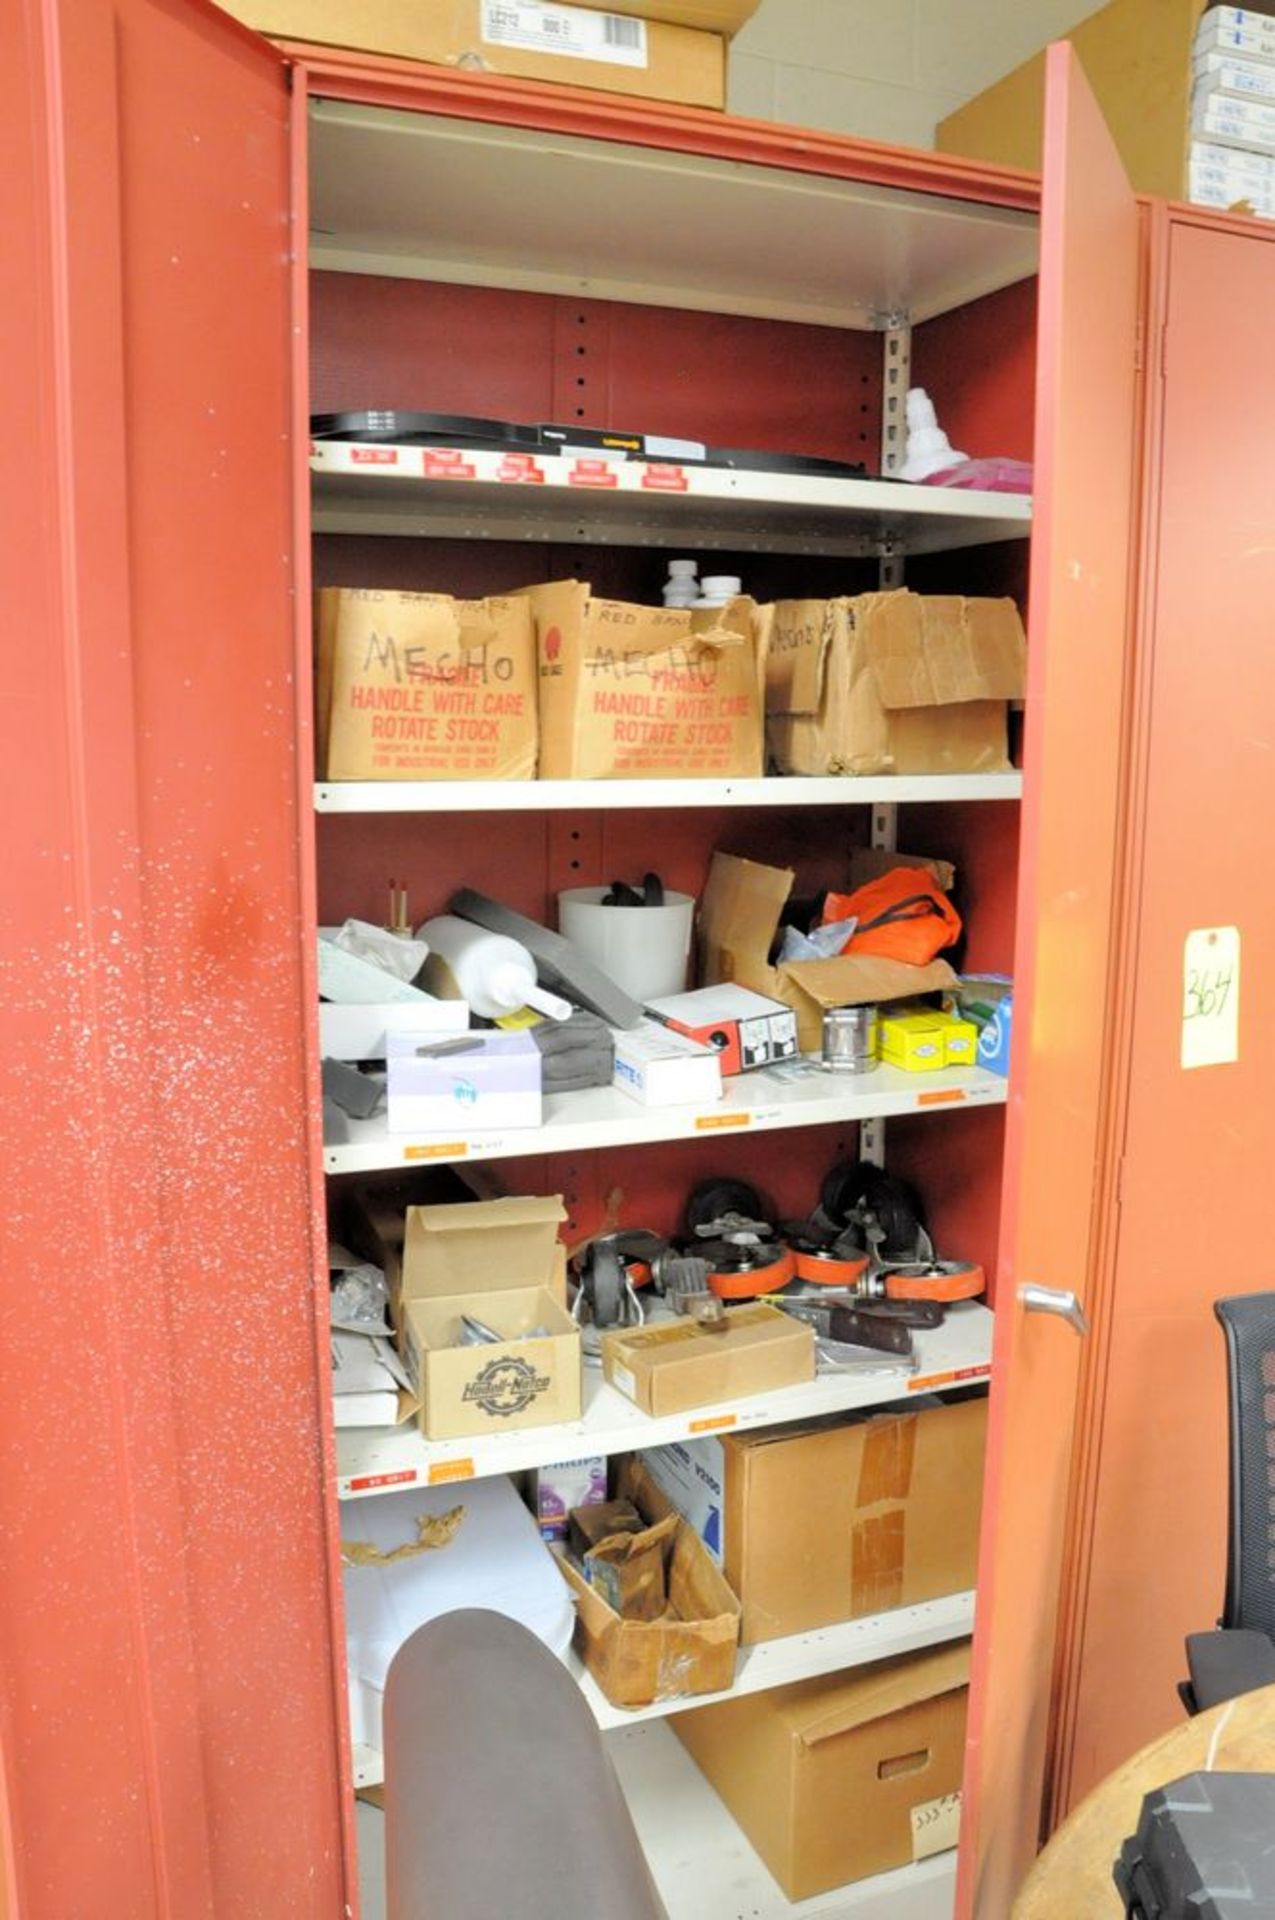 Lot-(5) 2-Door Storage Cabinets with General Maintenance Contents, (Maintenance Shop), (1st Floor) - Image 5 of 5